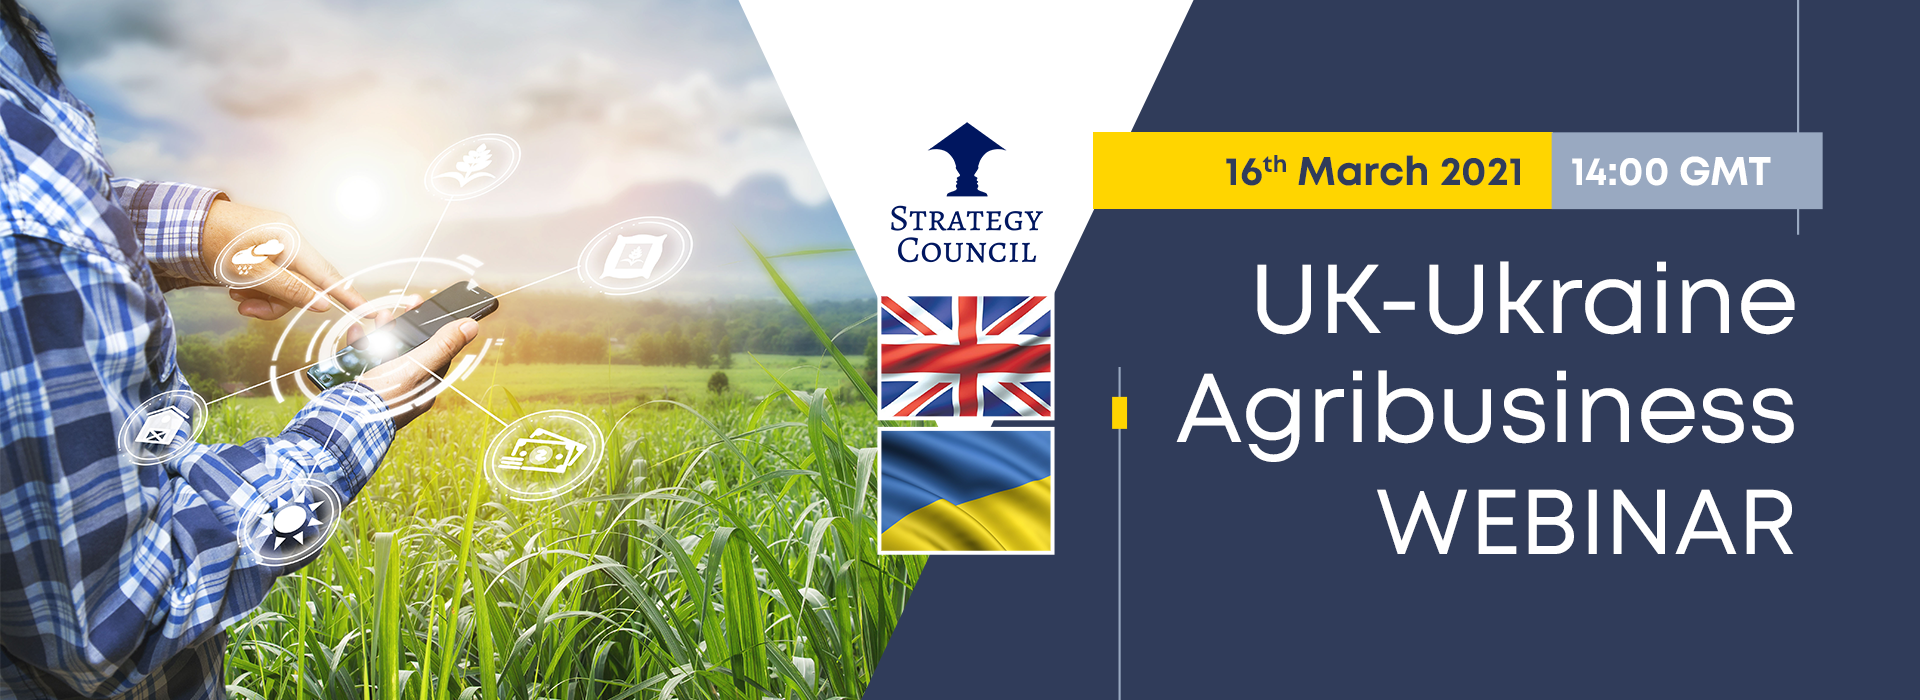 UK-Ukraine Agribusiness Webinar